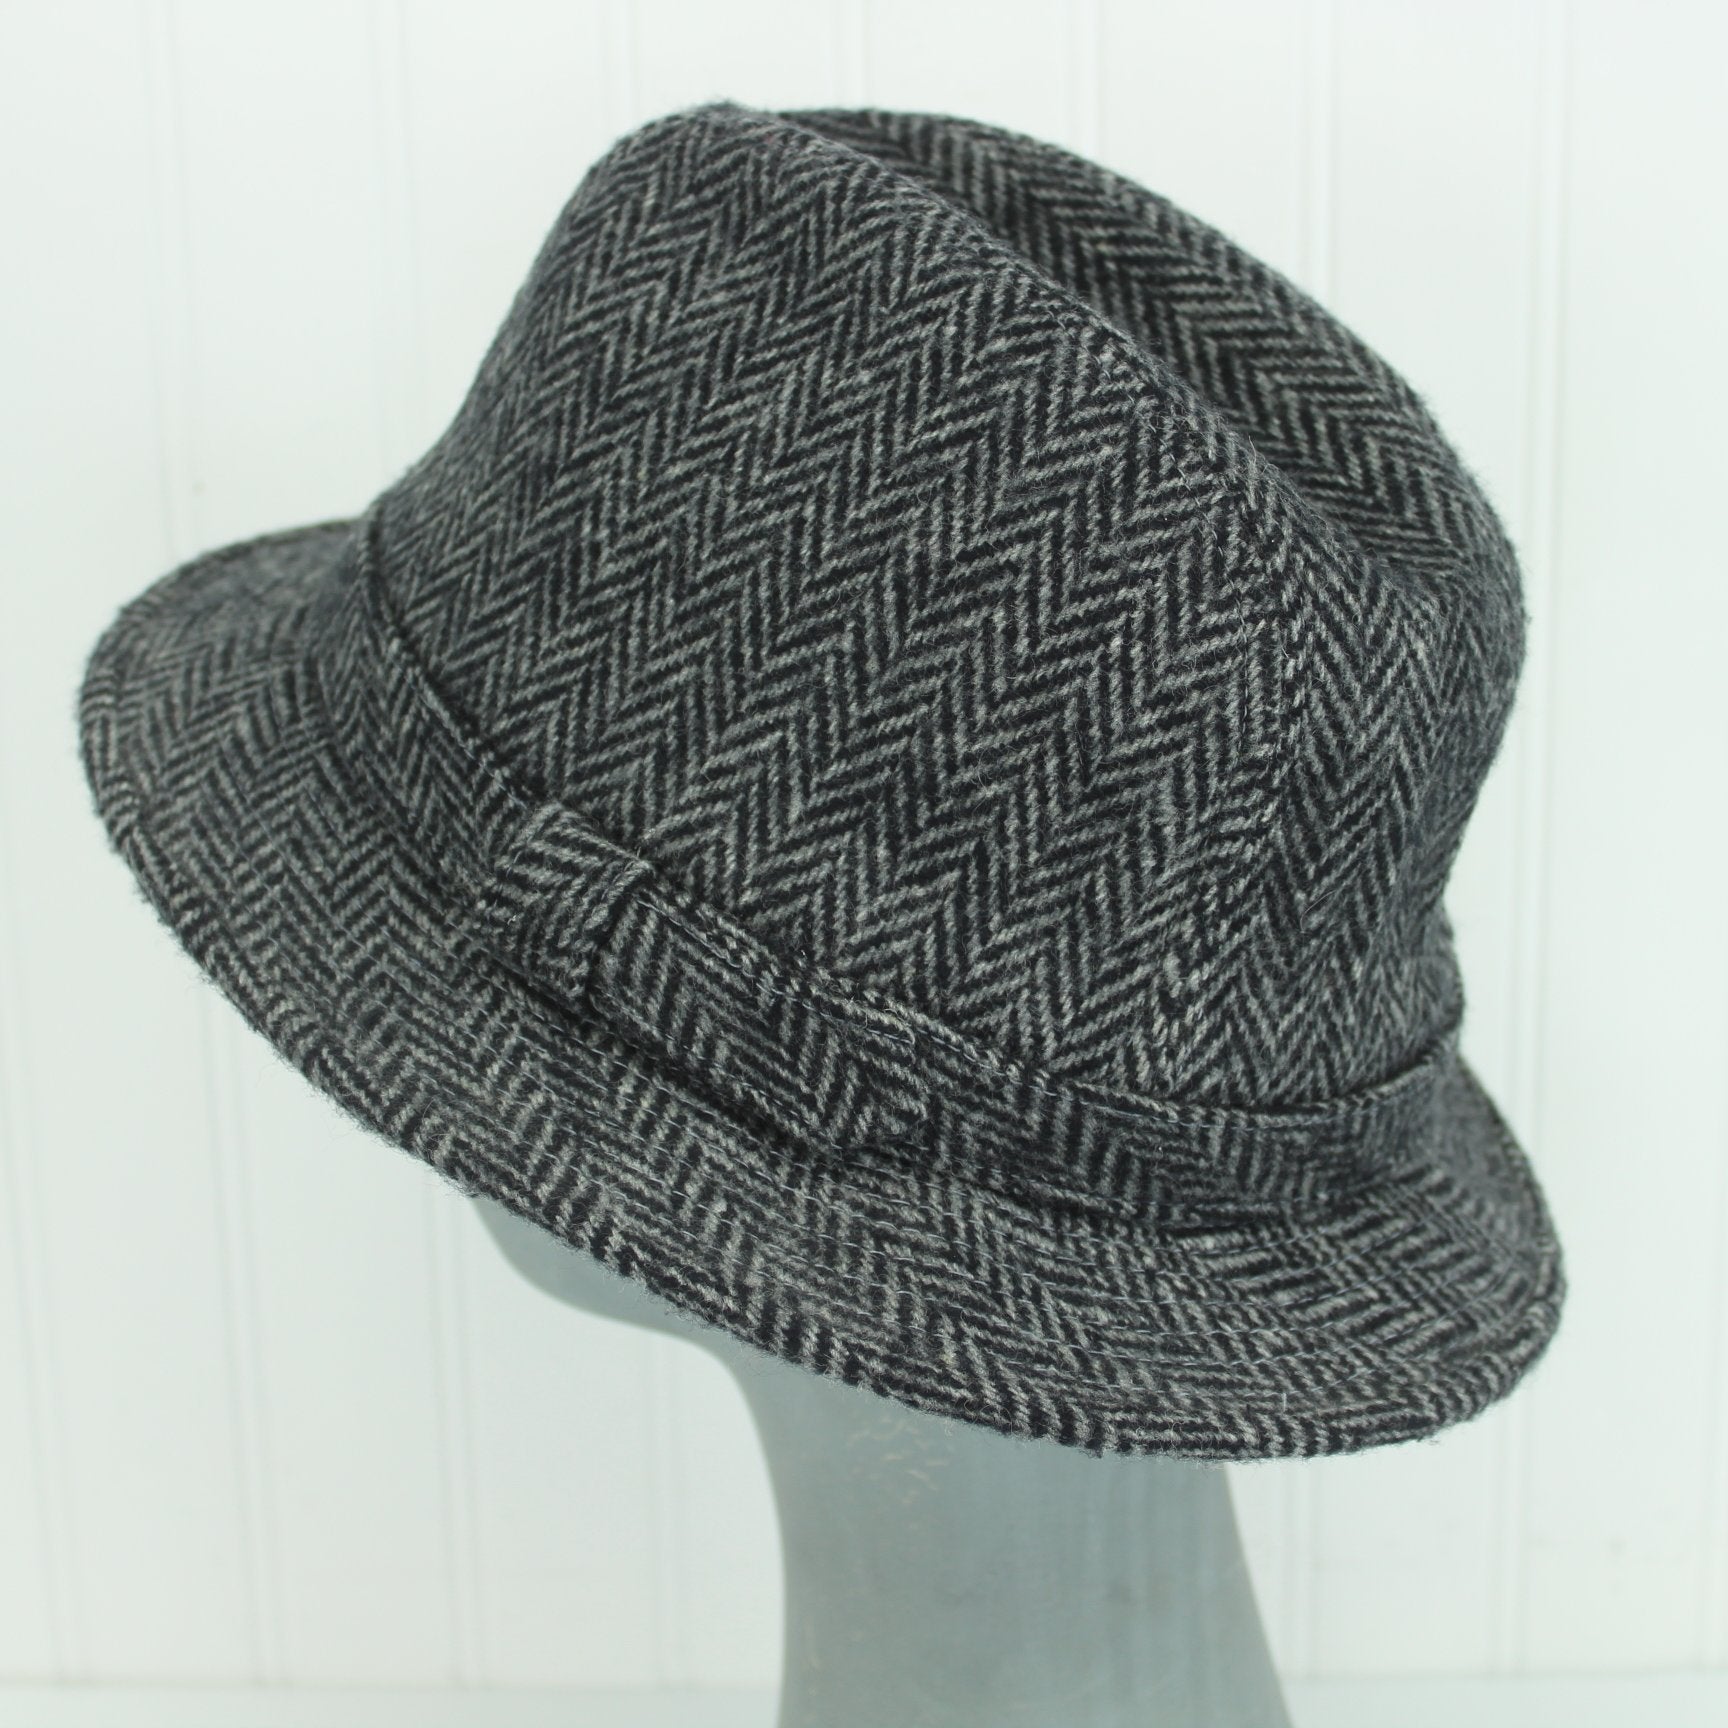 Dorfman Pacific Scala Hat Black Grey Herringbone Wool Blend back view